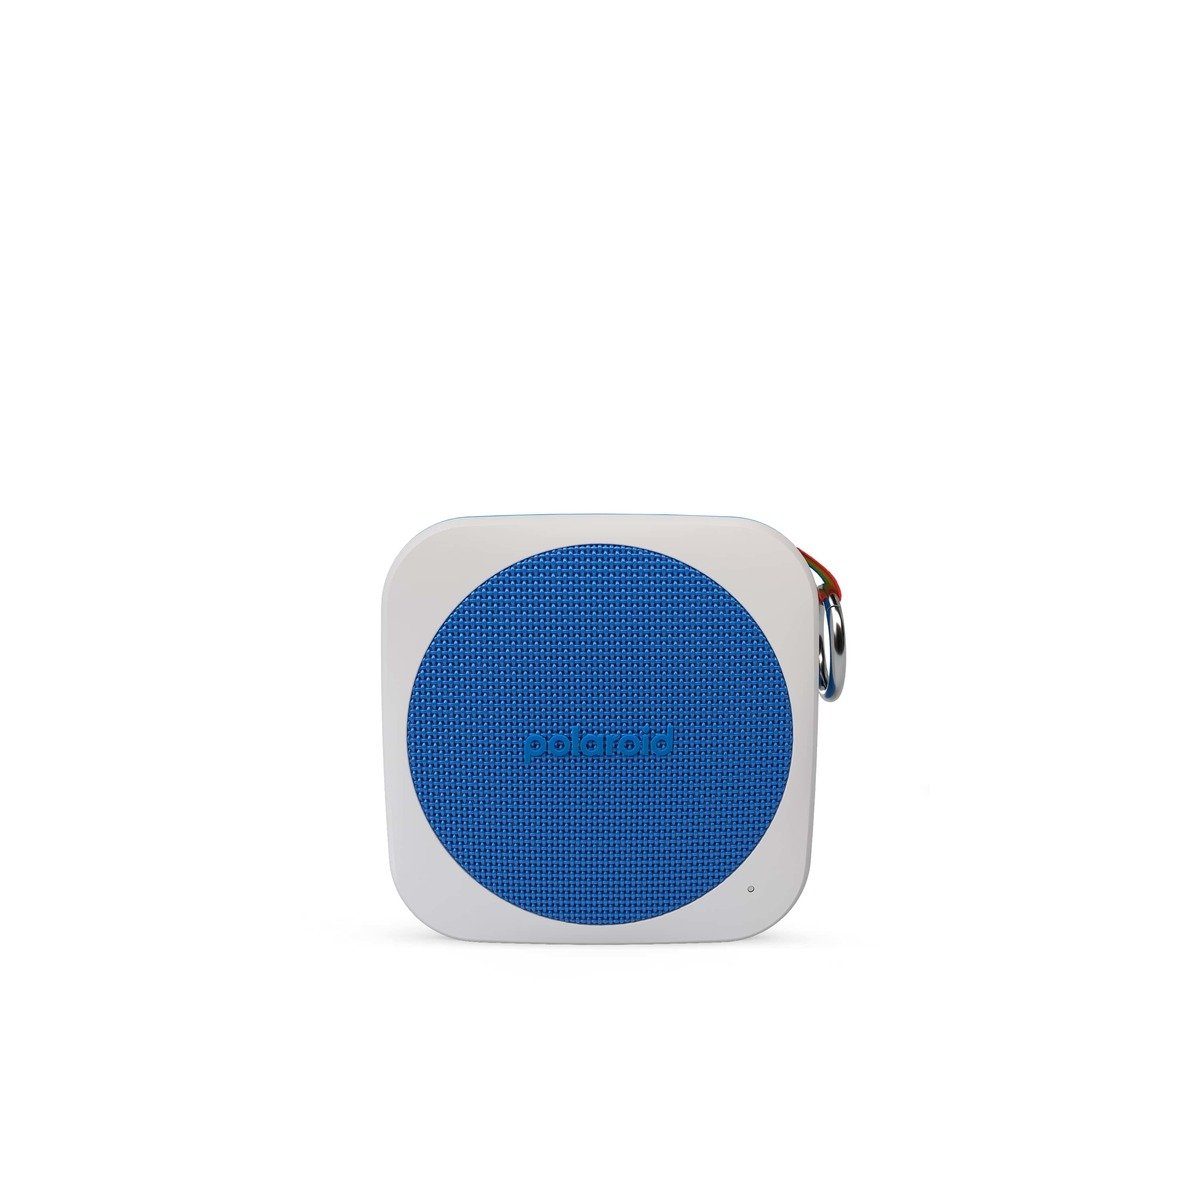 Polaroid Originals P1 Lautsprecher Player Wireless Music Blue